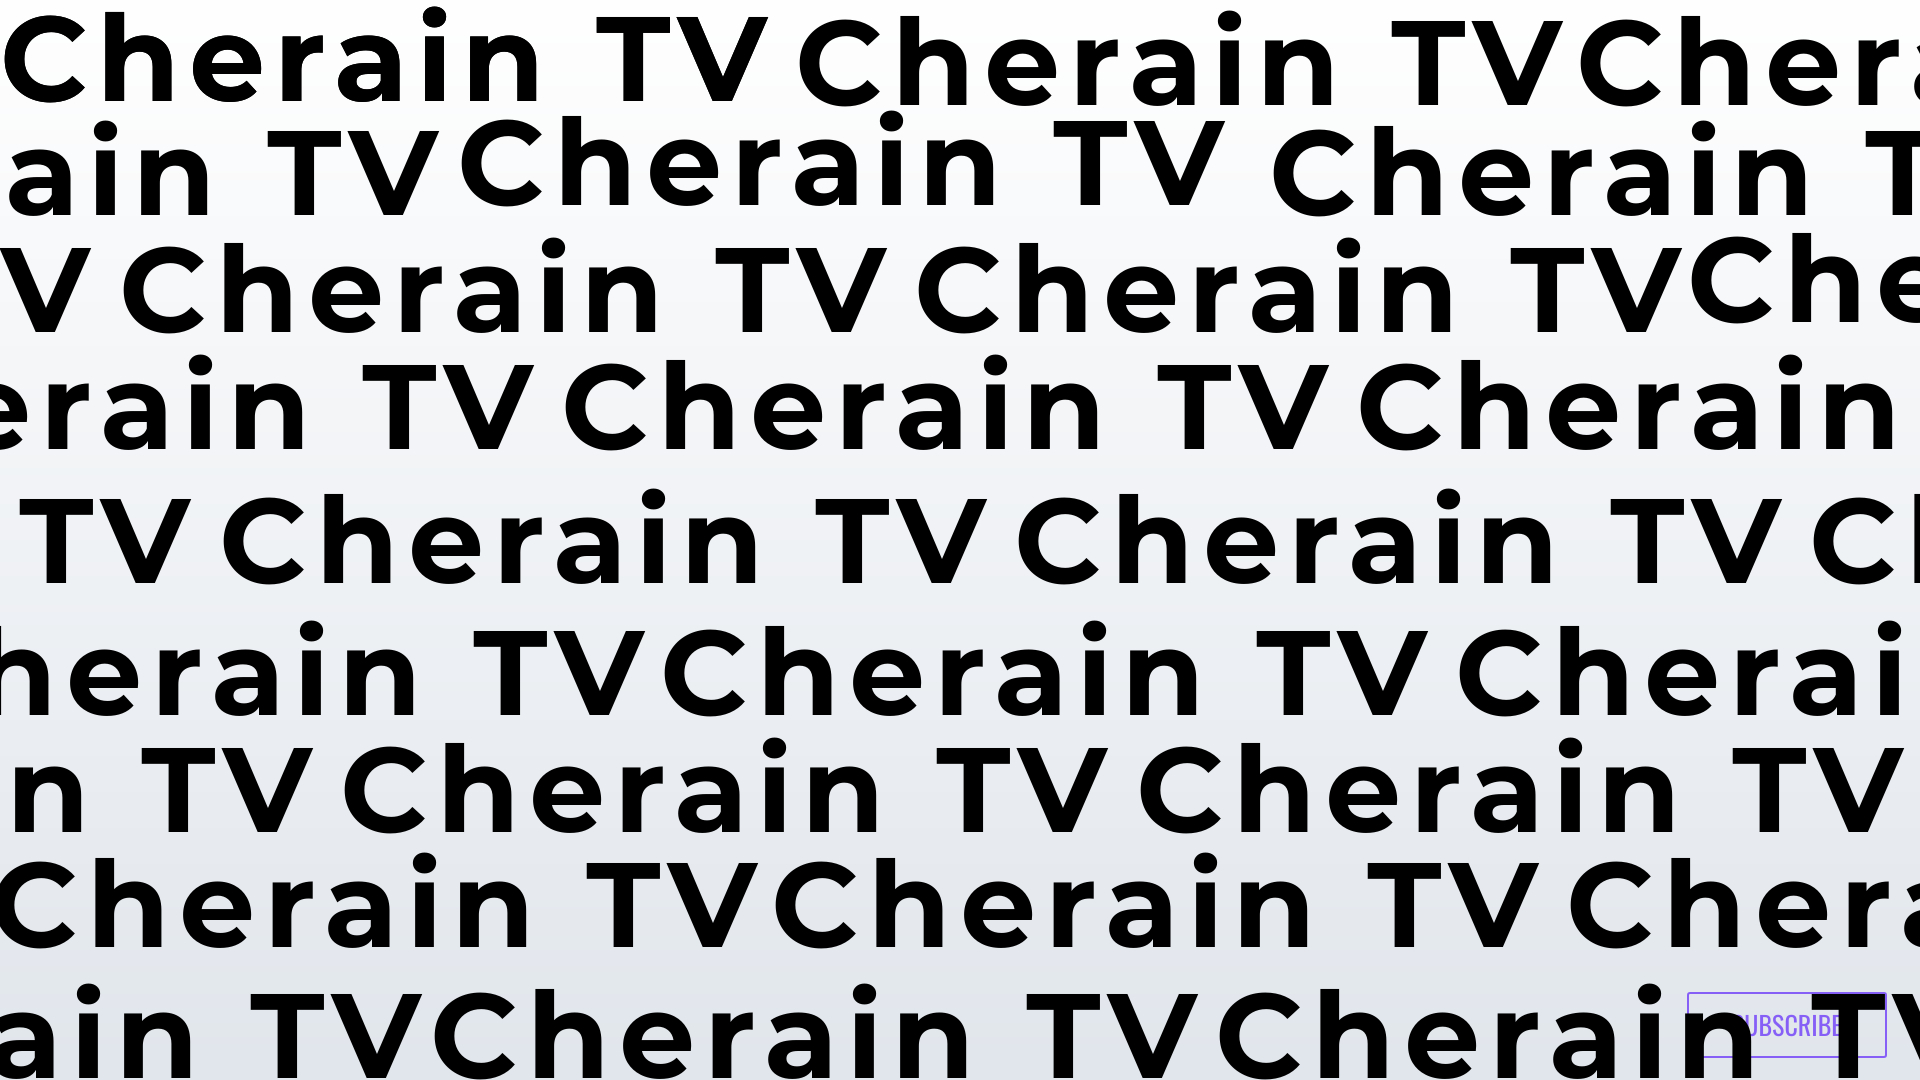 Cherain TV